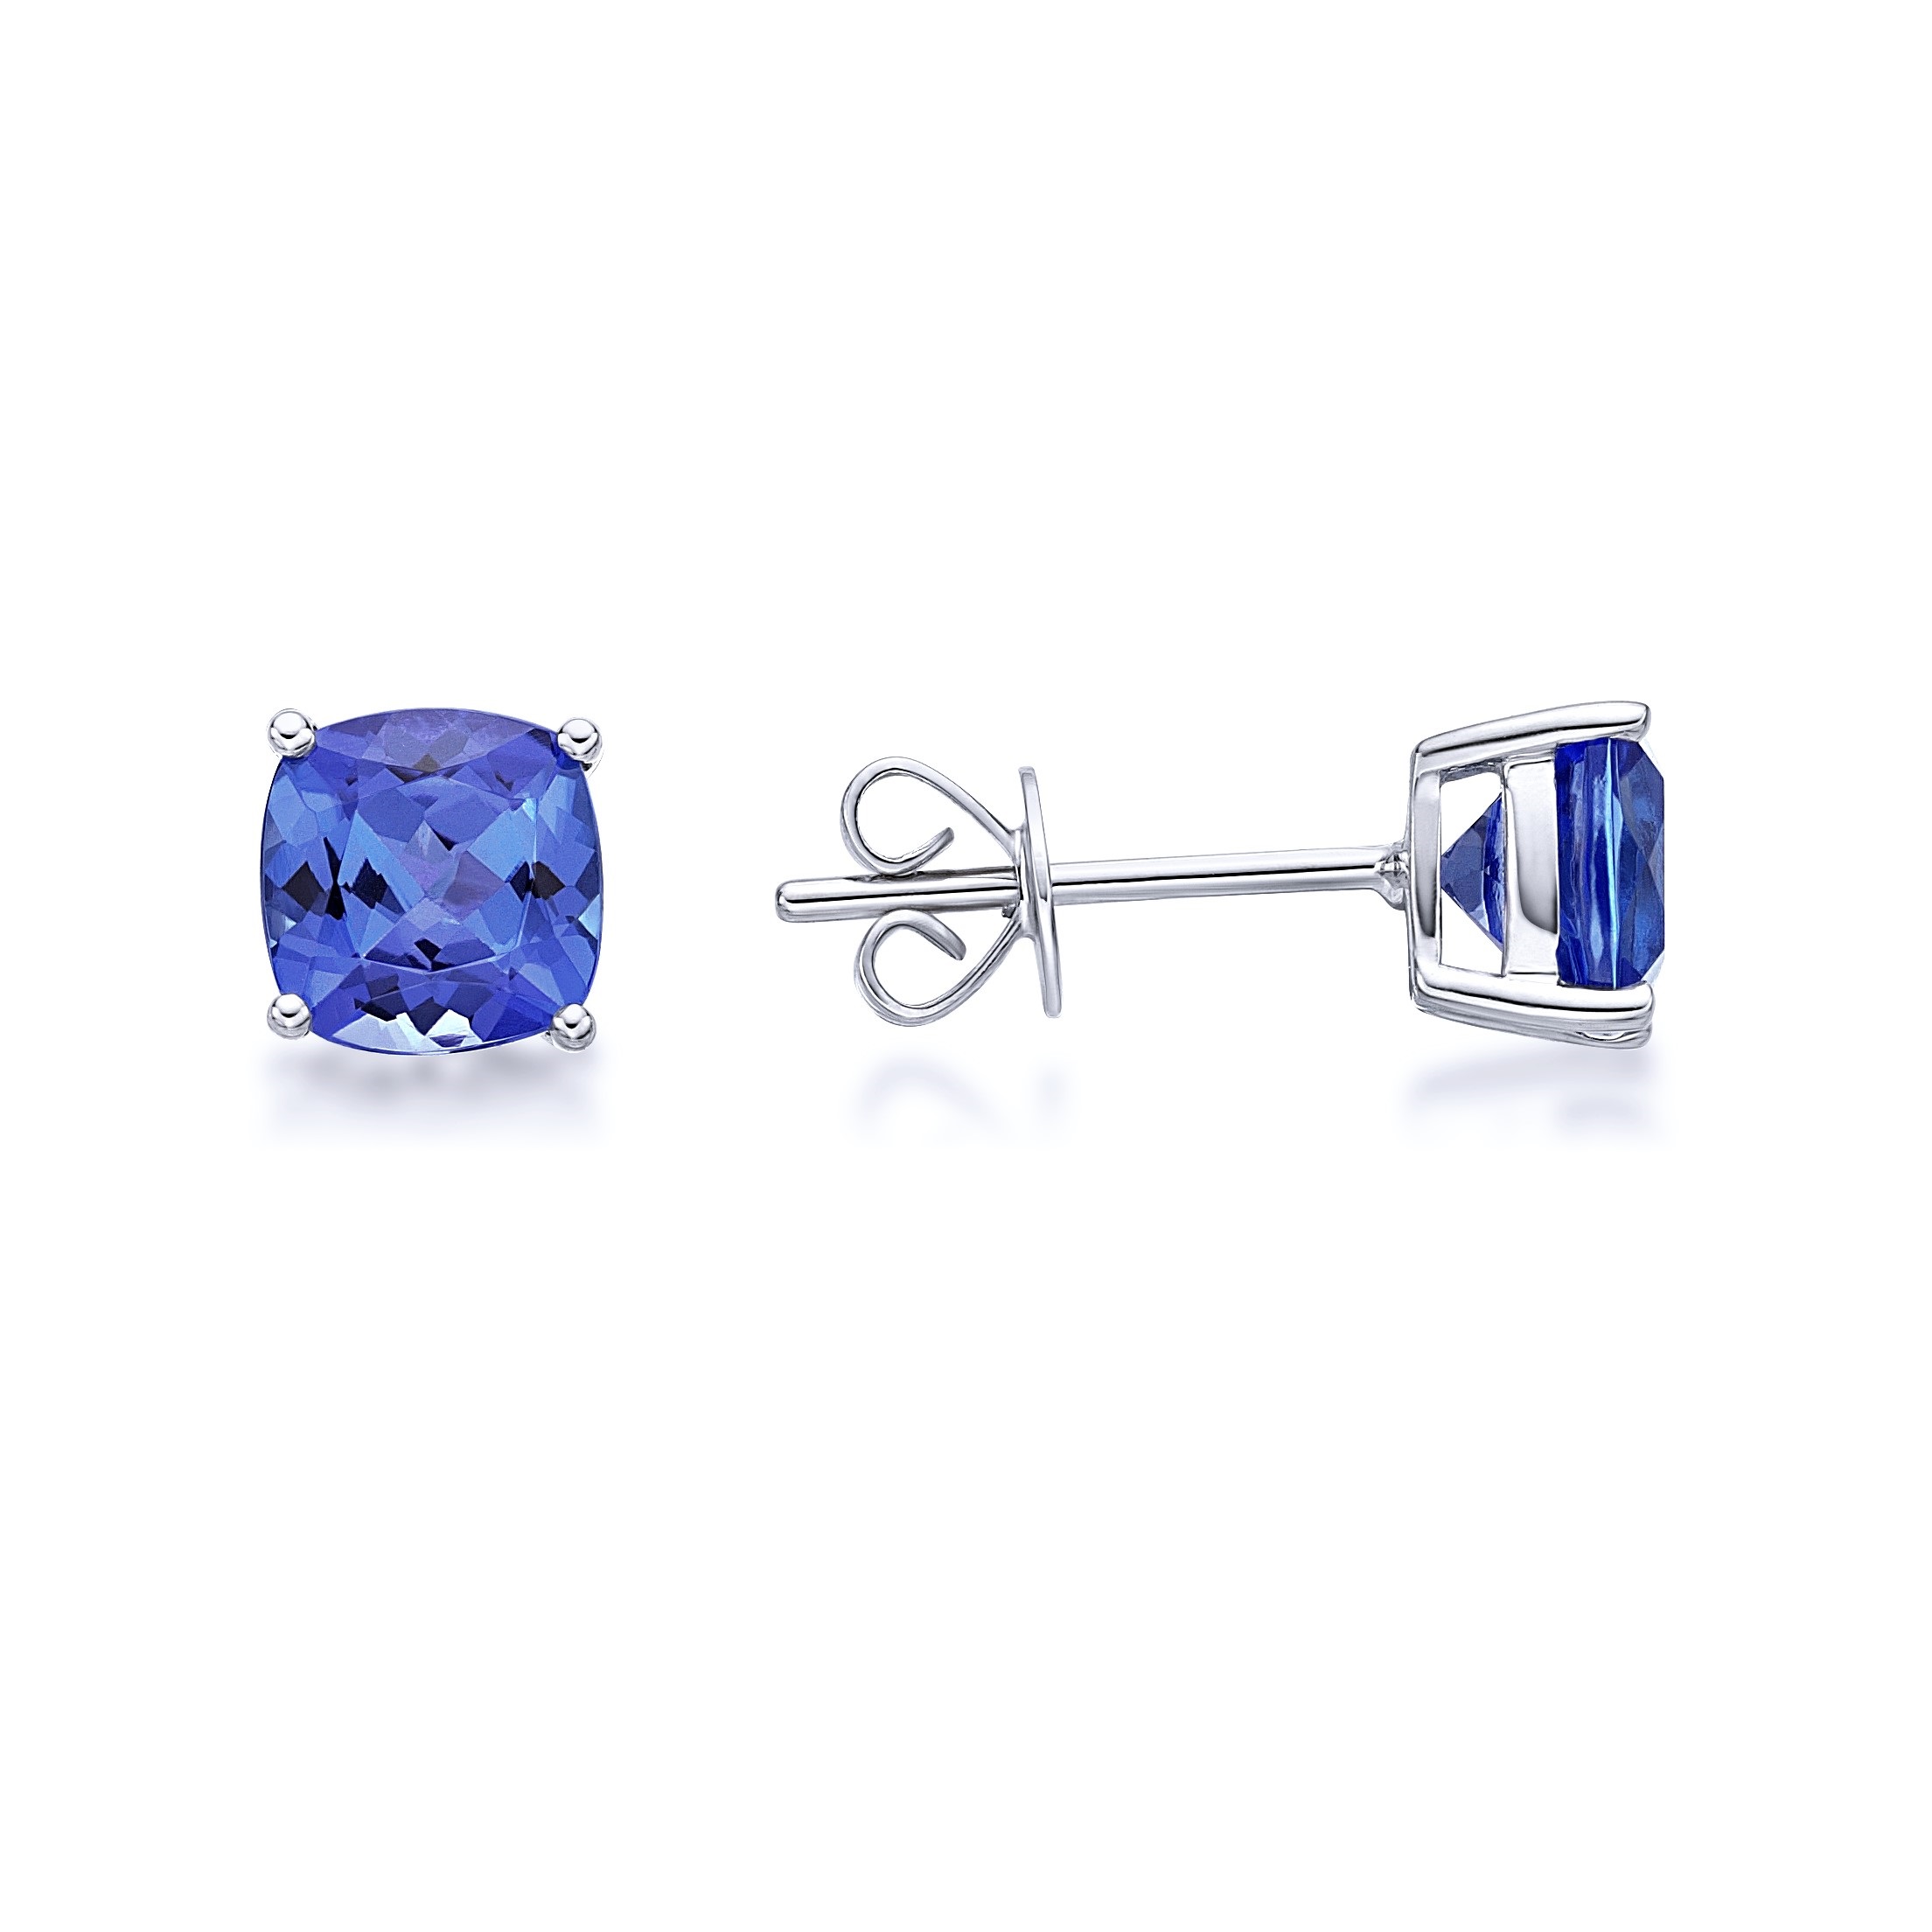 Share 81+ blue tanzanite earrings super hot - 3tdesign.edu.vn